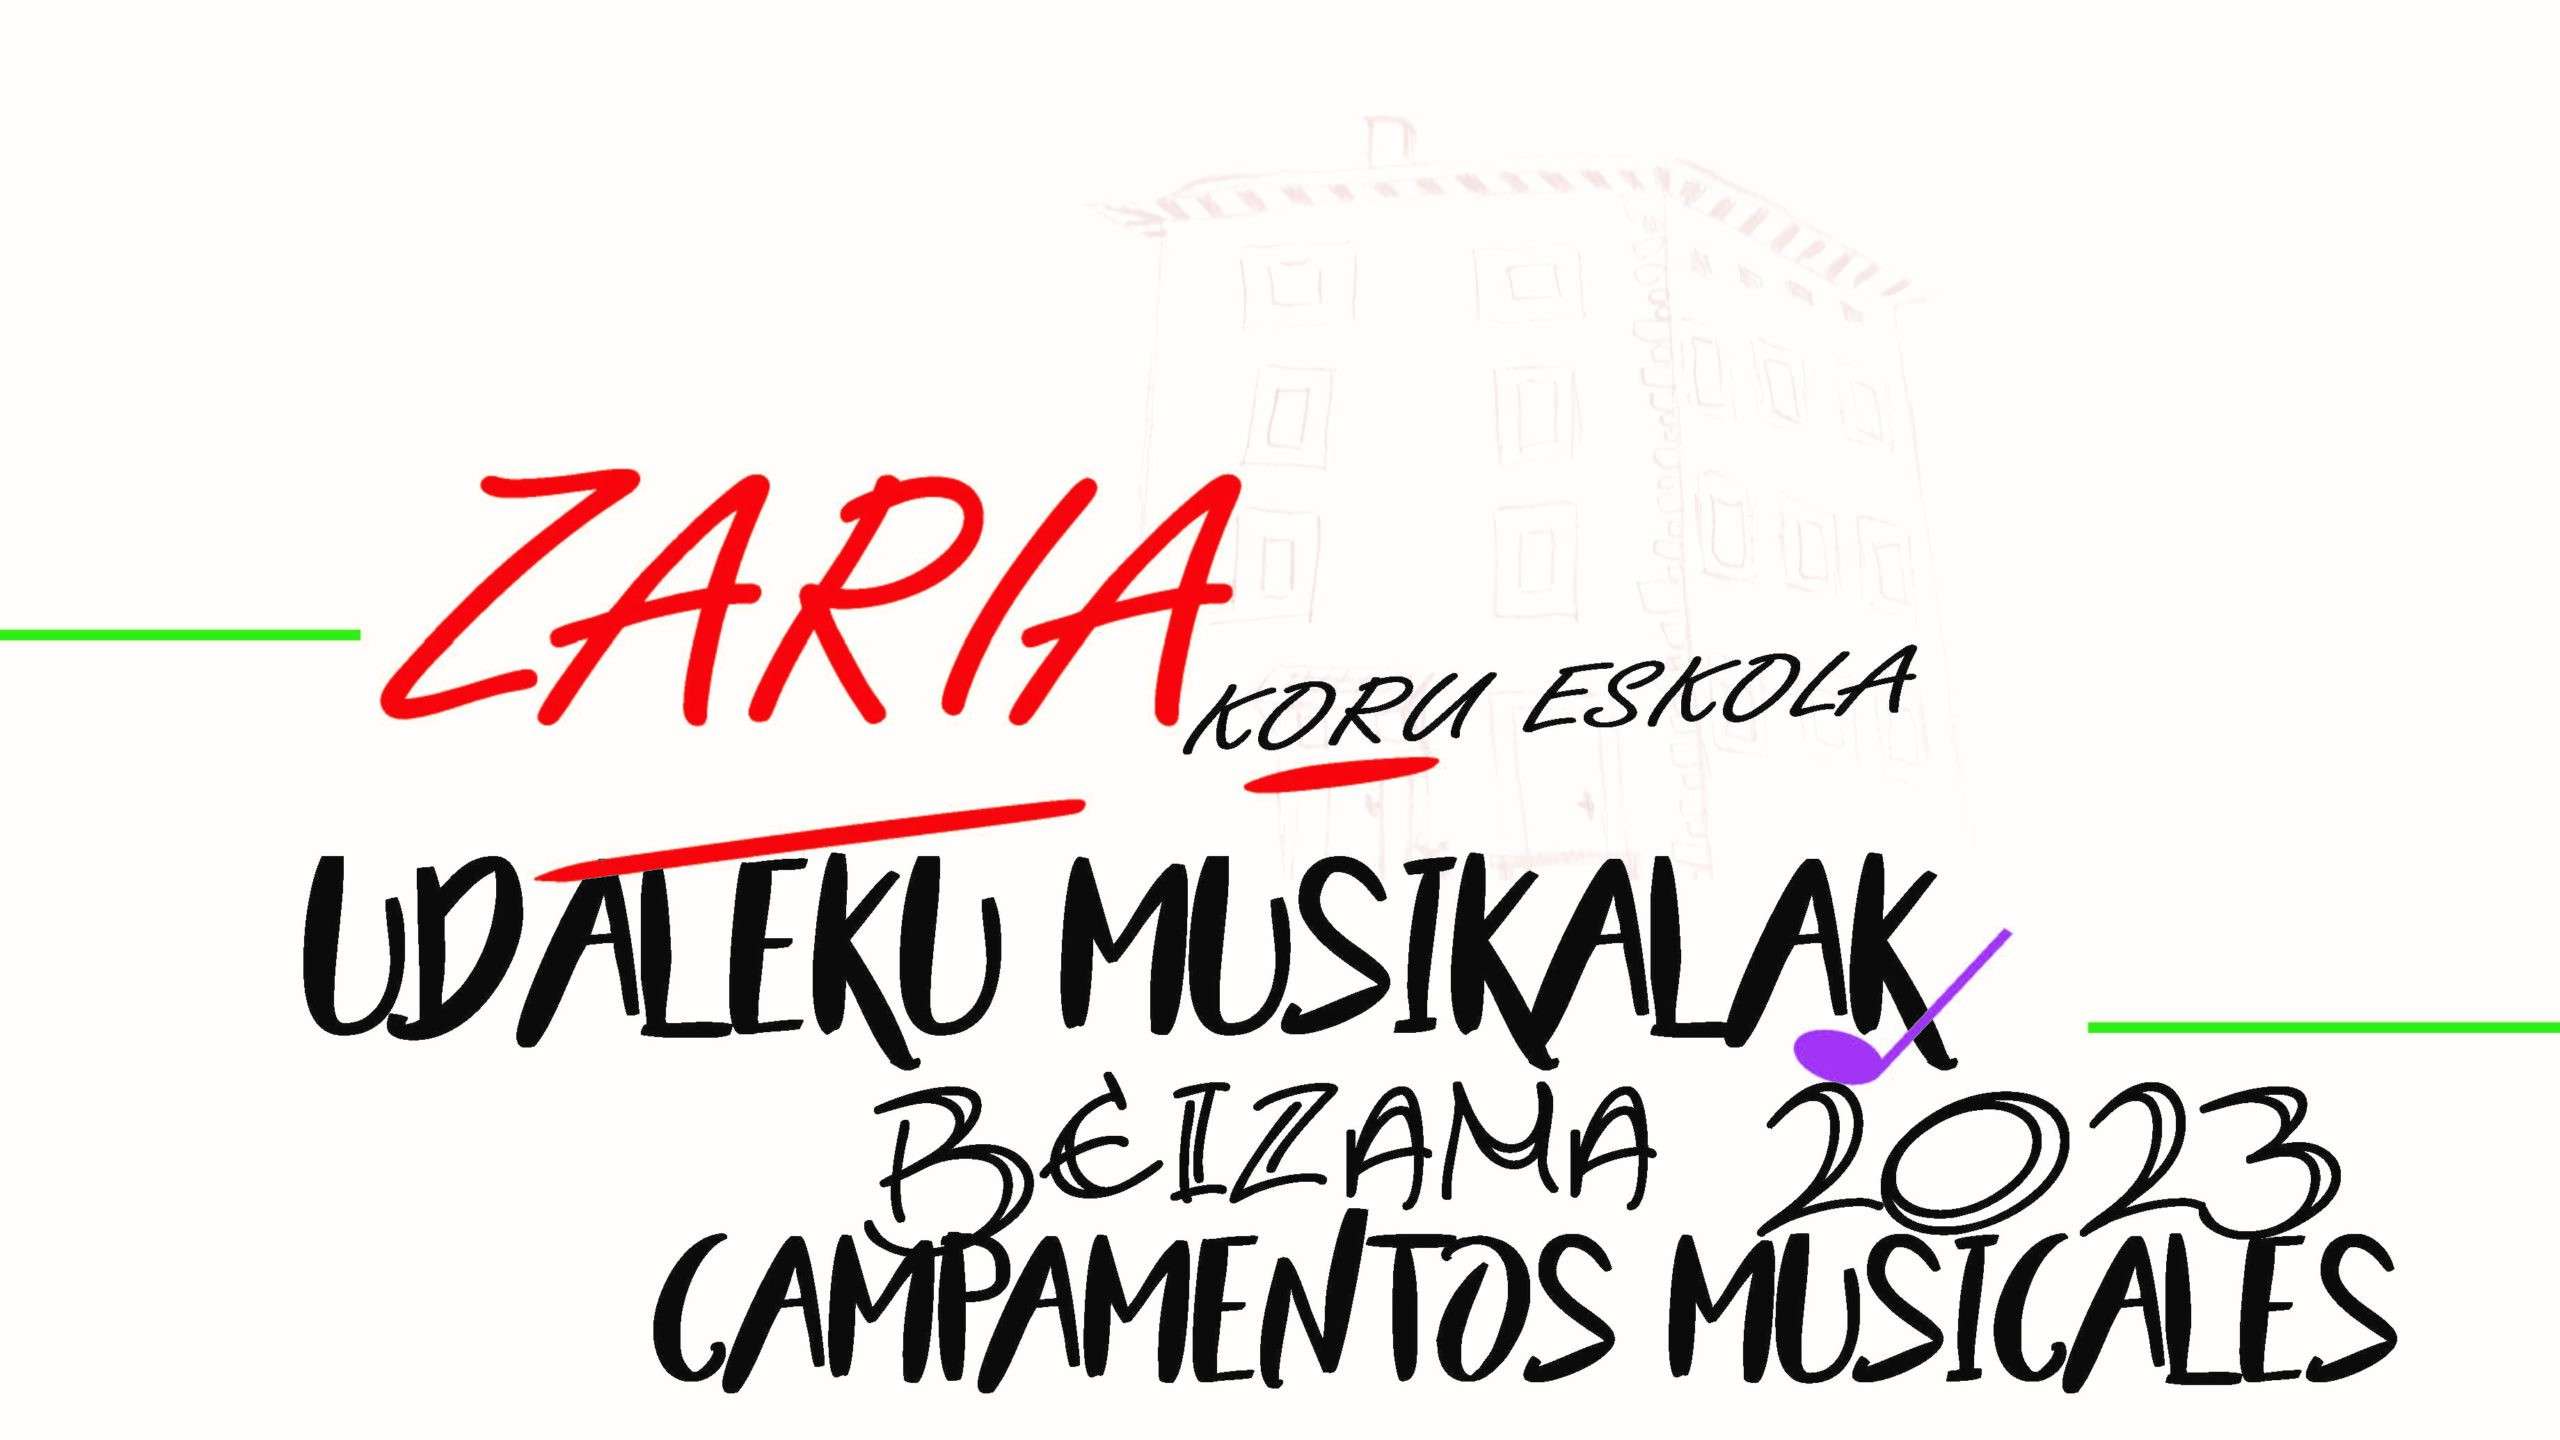 Zaria Koru Eskola ha organizado campamentos musicales